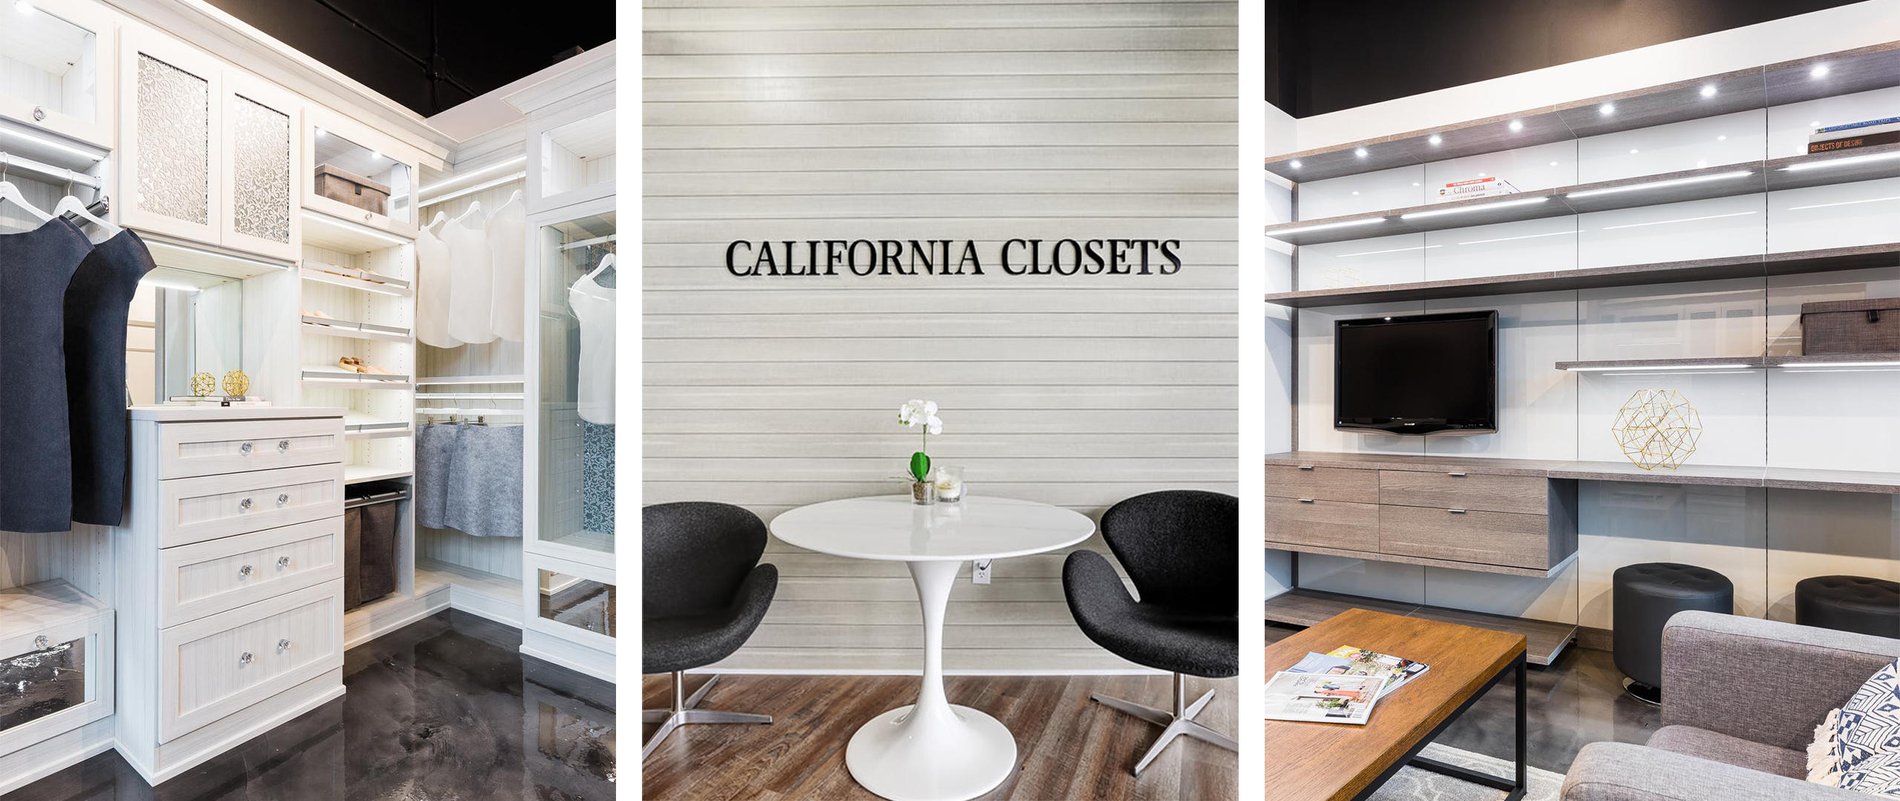 Custom Closets and Closet Systems Kelowna, British Columbia - California Closets